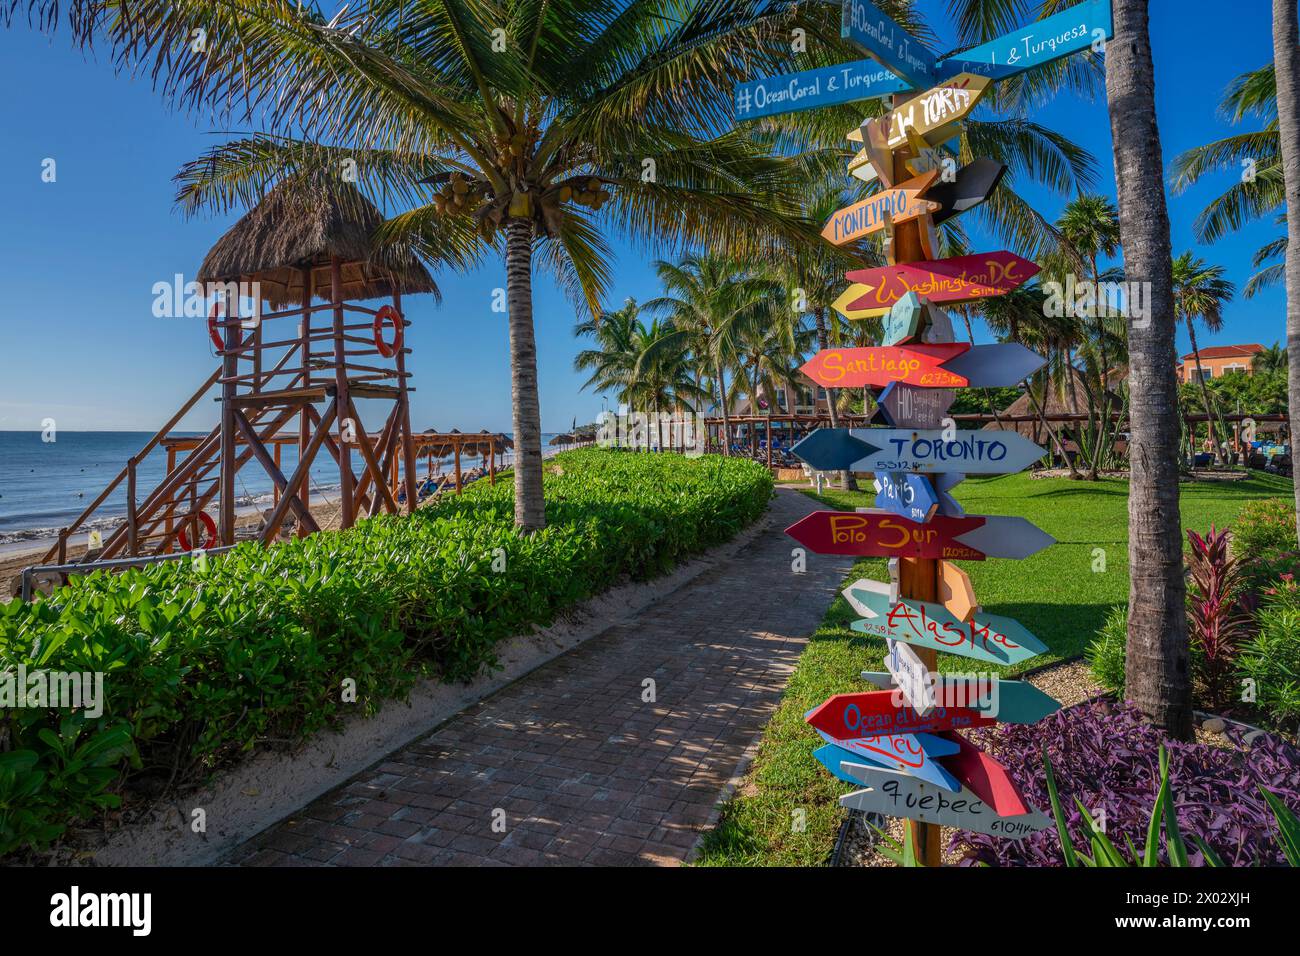 View of colourful hotel destination signpost near Puerto Morelos, Caribbean Coast, Yucatan Peninsula, Mexico, North America Stock Photo